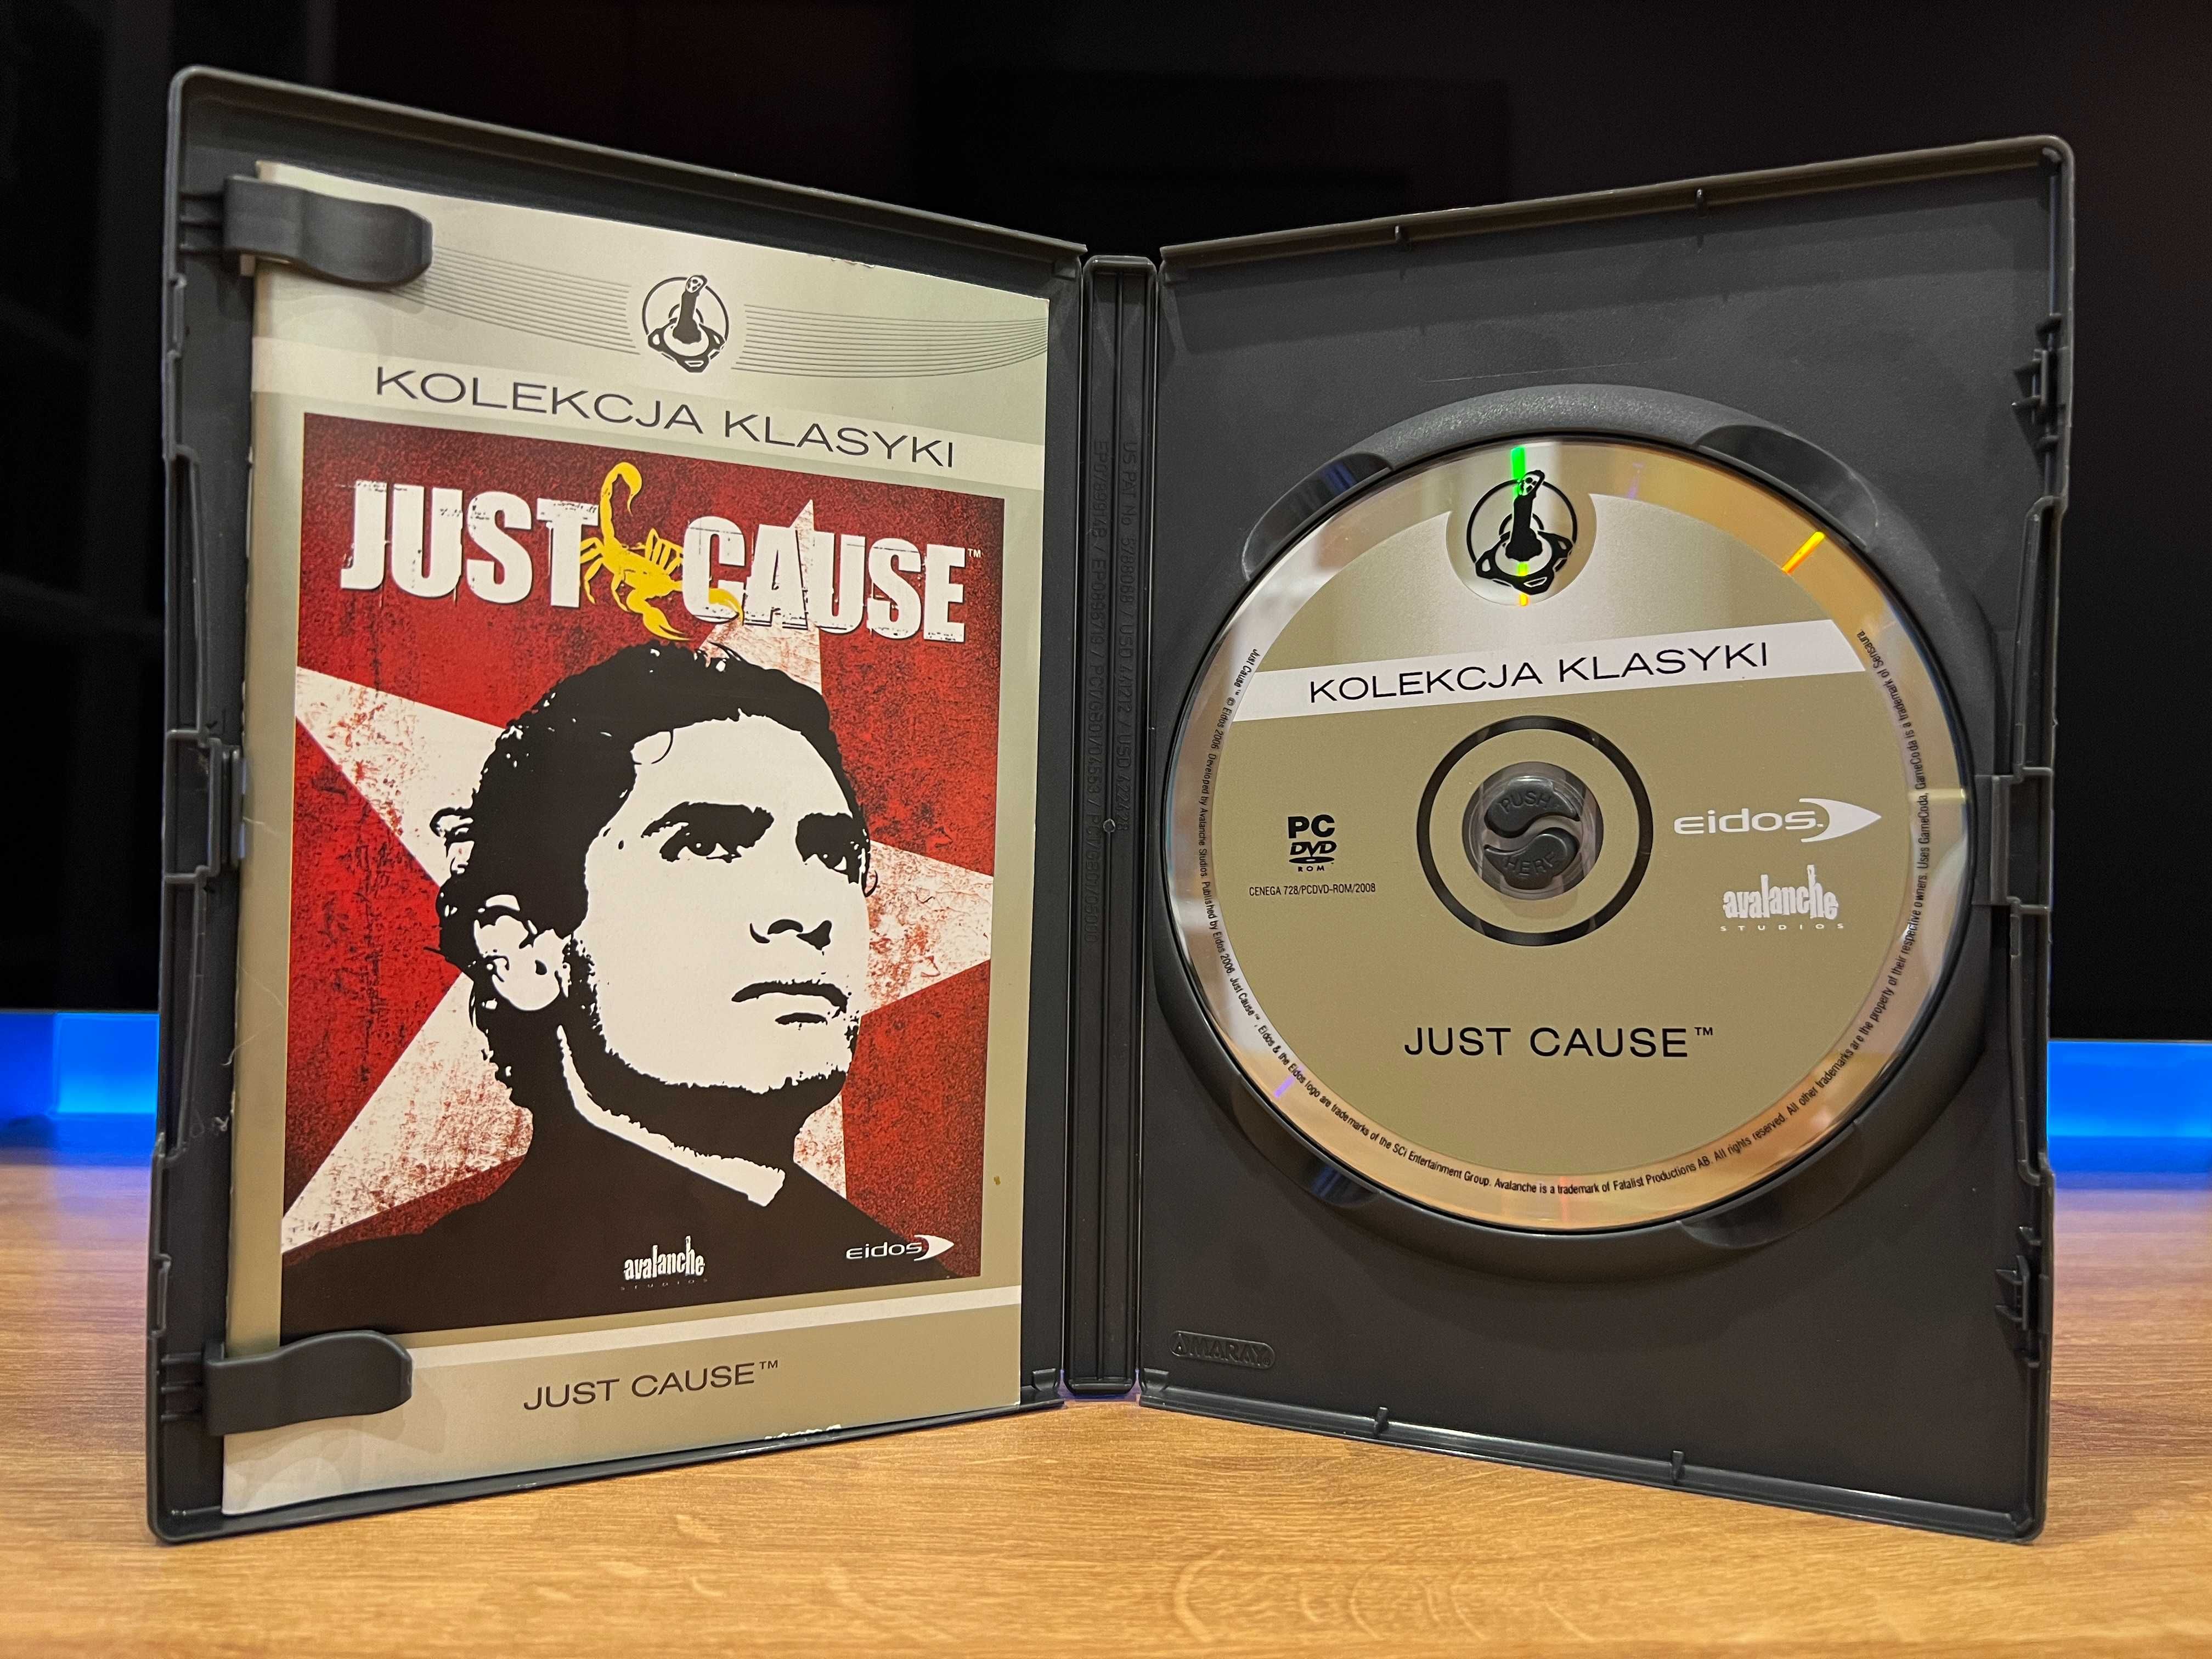 Just Cause 1 gra (PC PL 2006) kompletne wydanie Kolekcja Klasyki